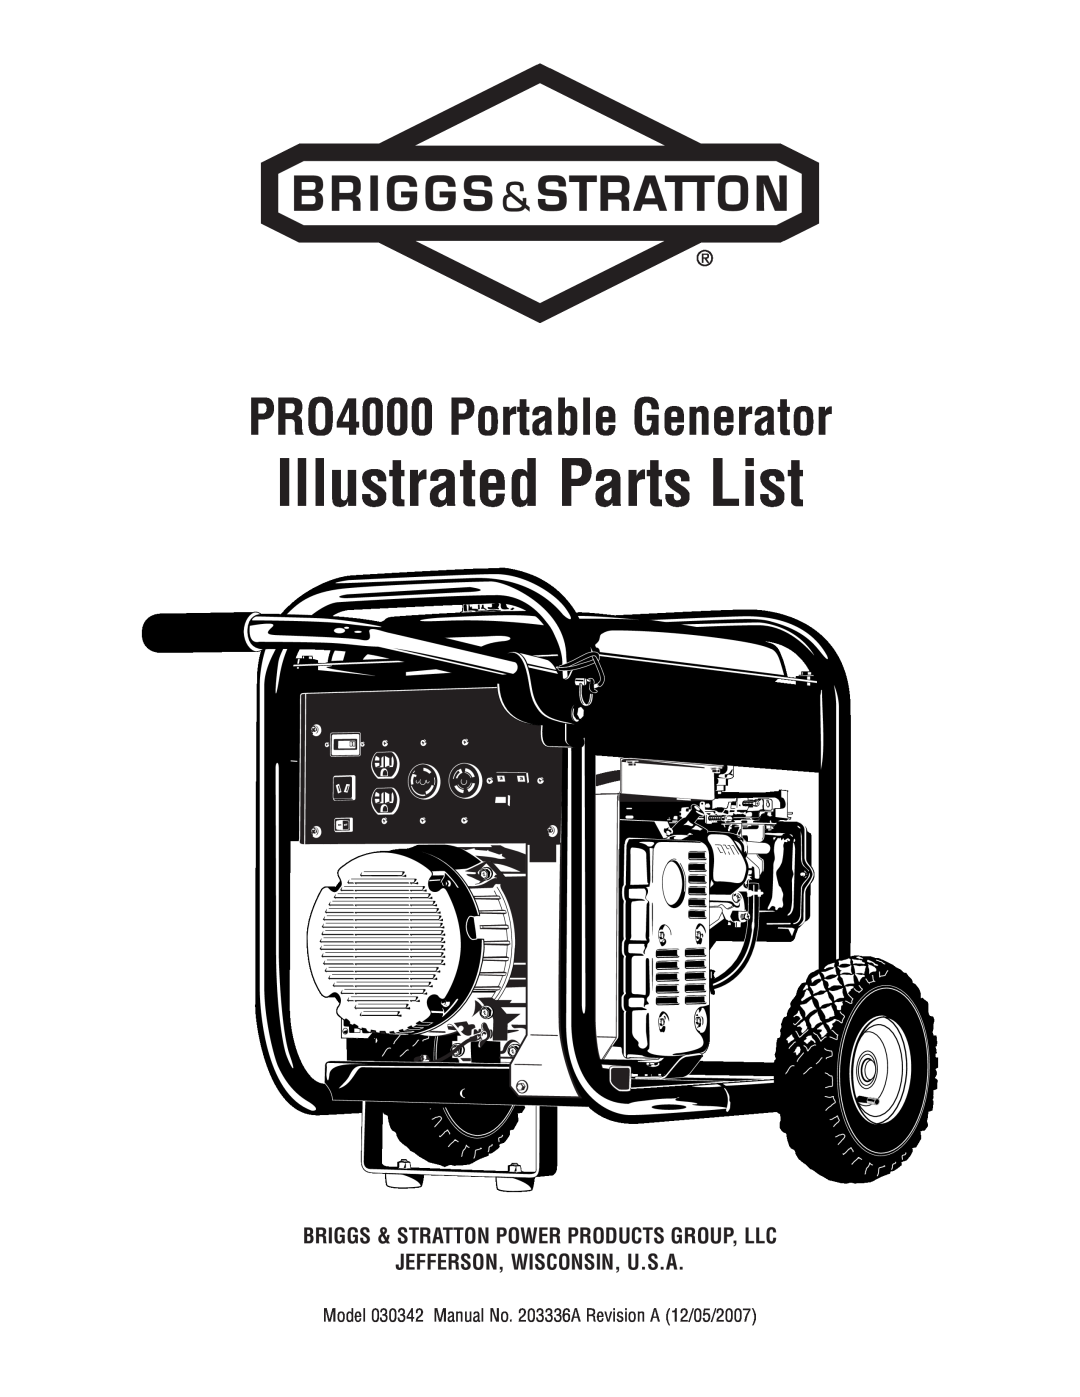 Briggs & Stratton 30342 manual Illustrated Parts List, PRO4000 Portable Generator, Jefferson, Wisconsin, U.S.A 